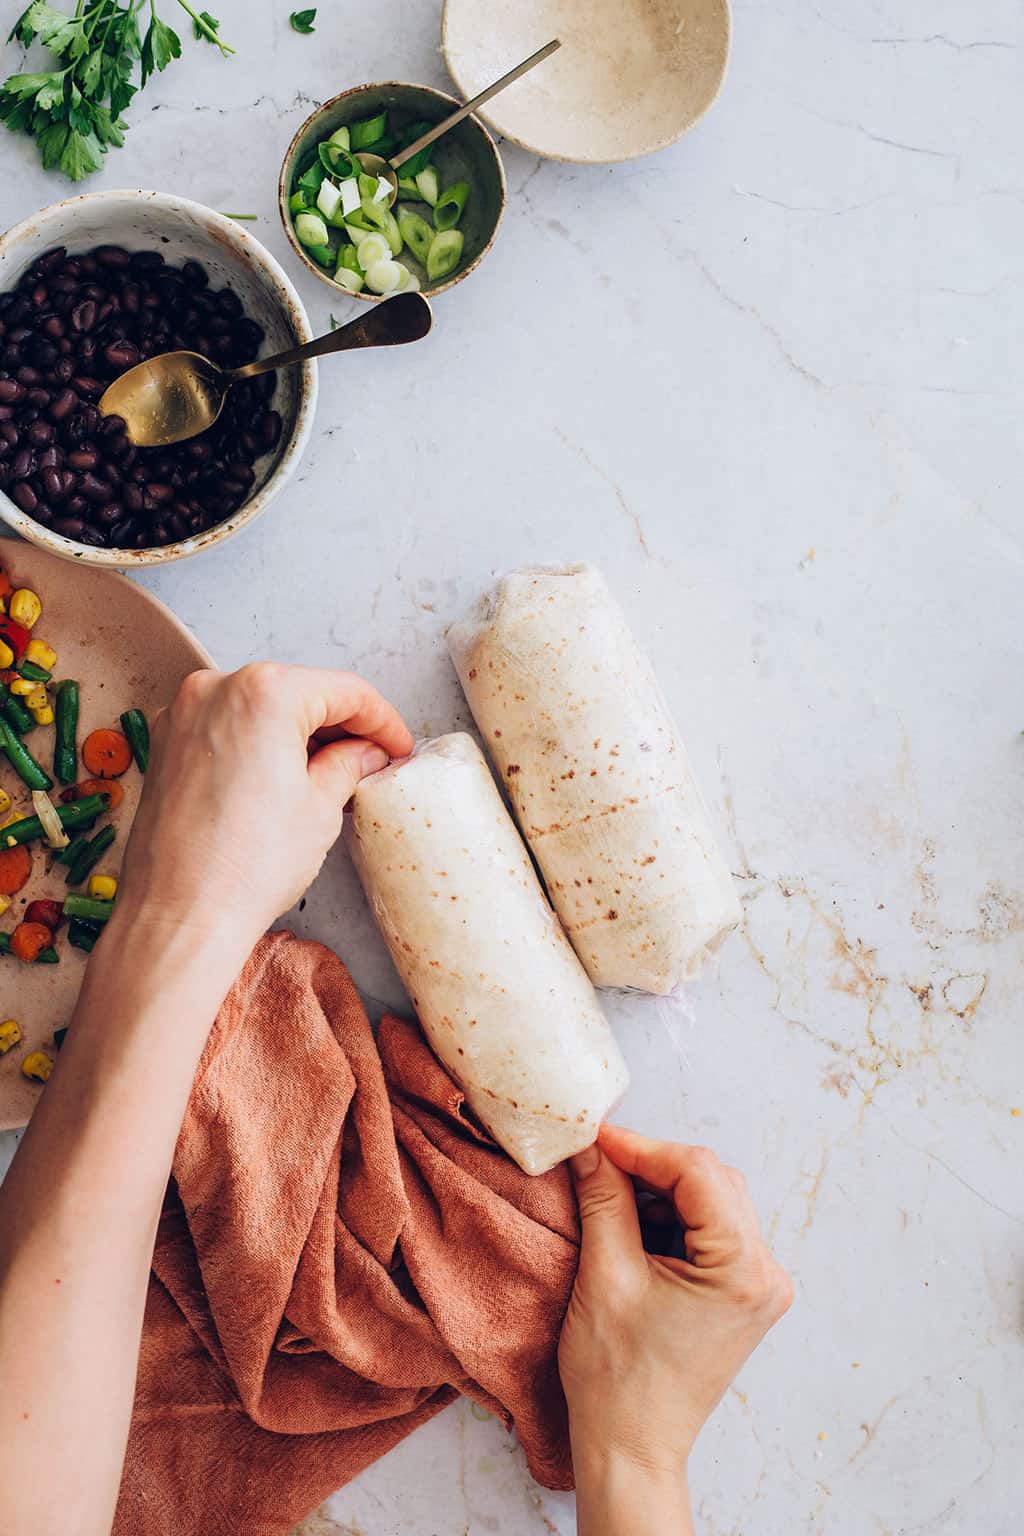 How to Make Freezer-Friendly Breakfast Burritos